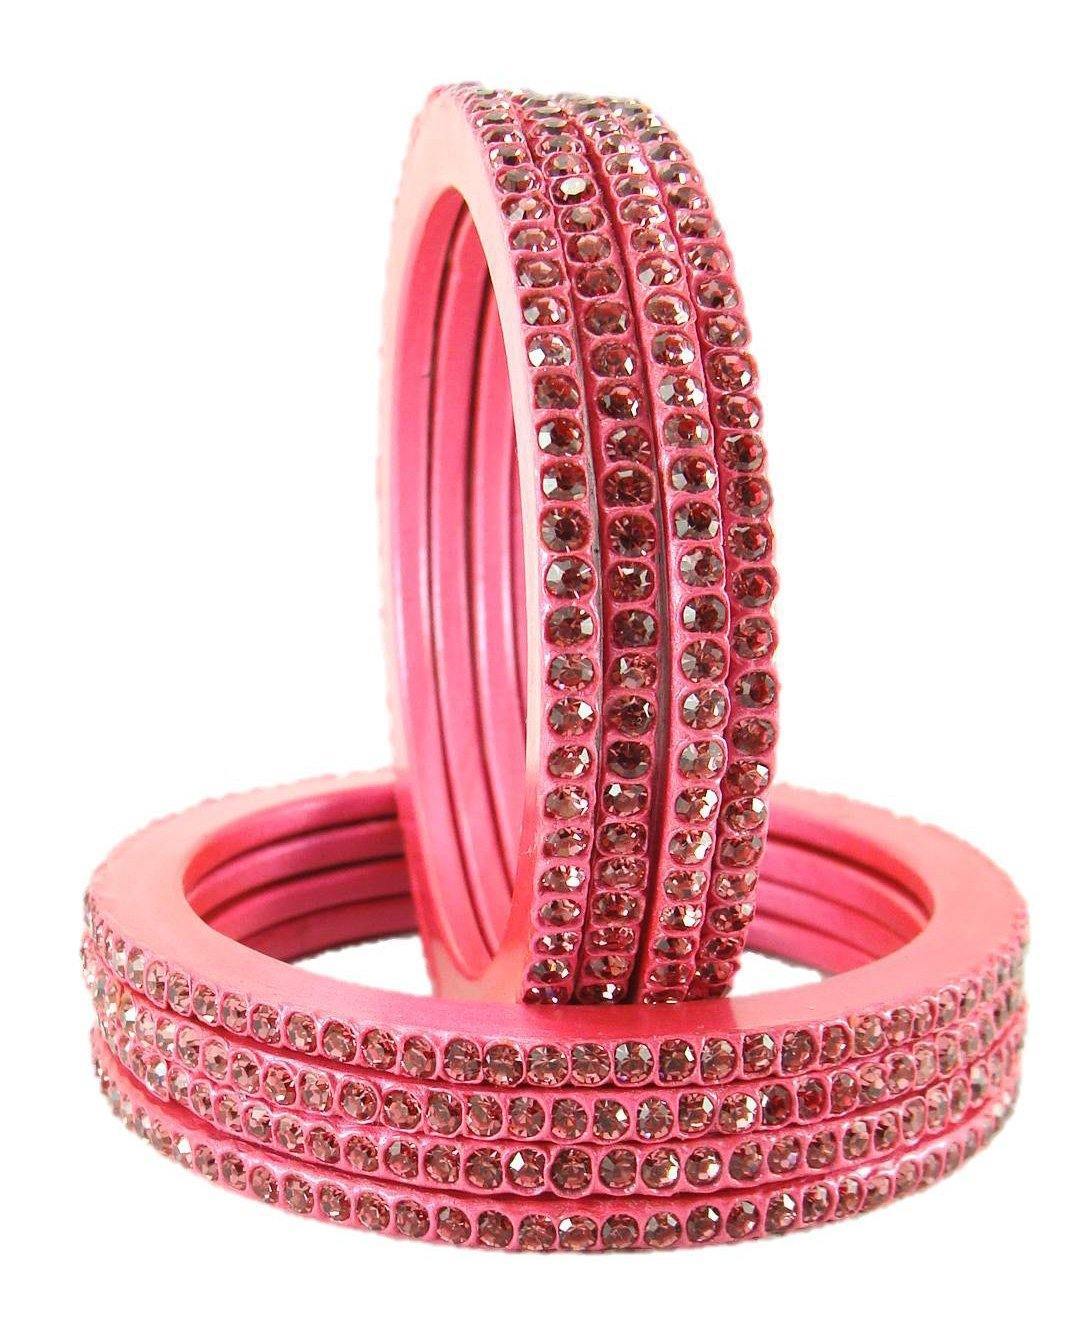 sukriti rajasthani traditional pink lac bangles for women - set of 8